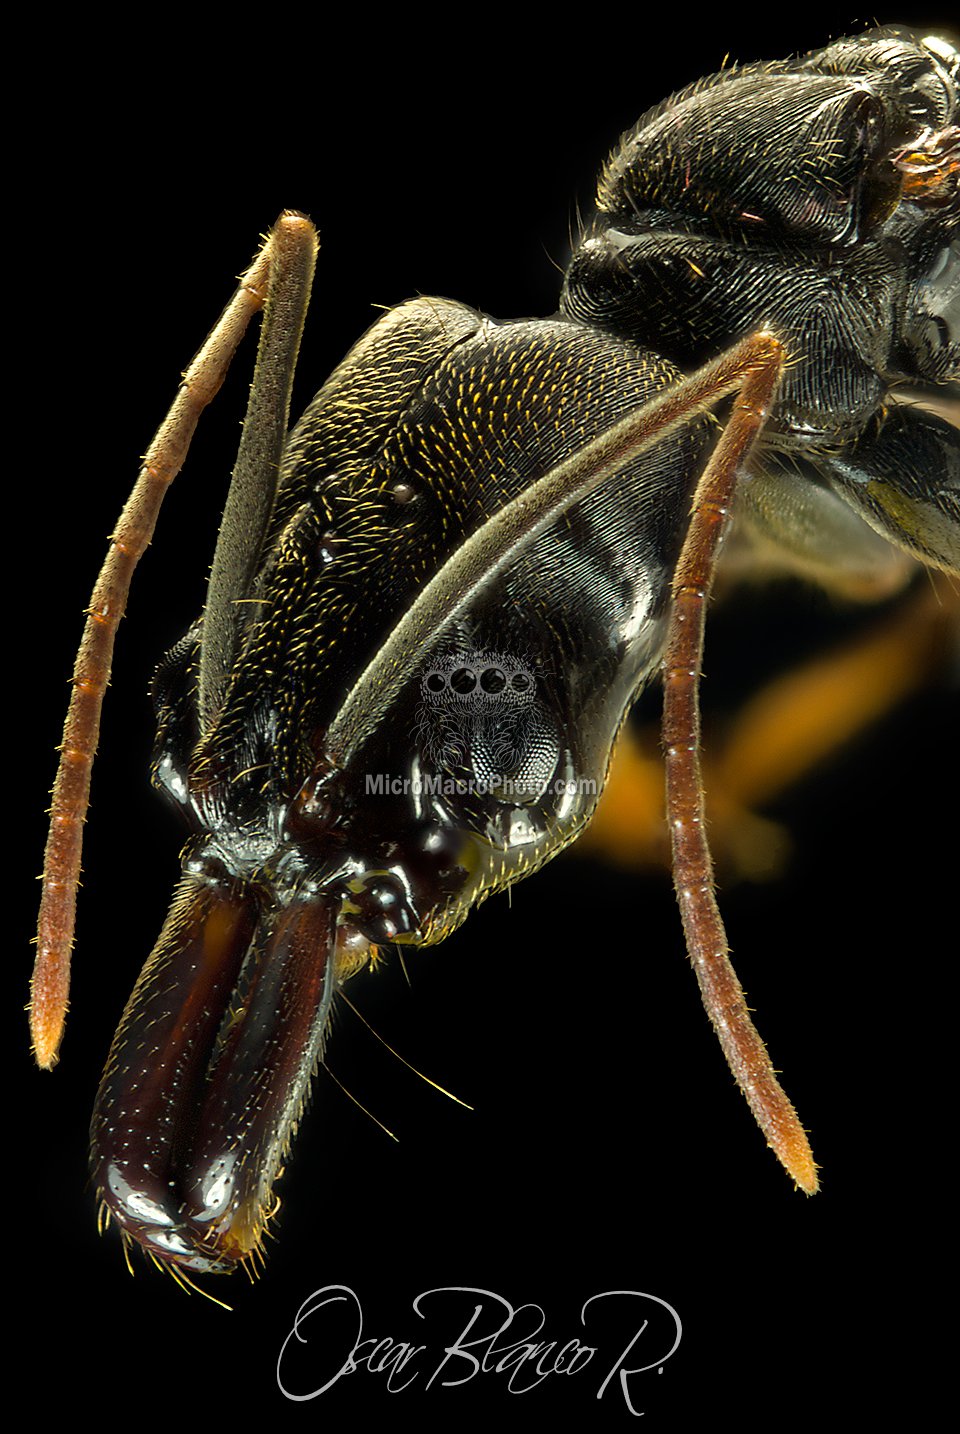 trapjaw-ant-odontomachus-bauri-close-up-costa-rica